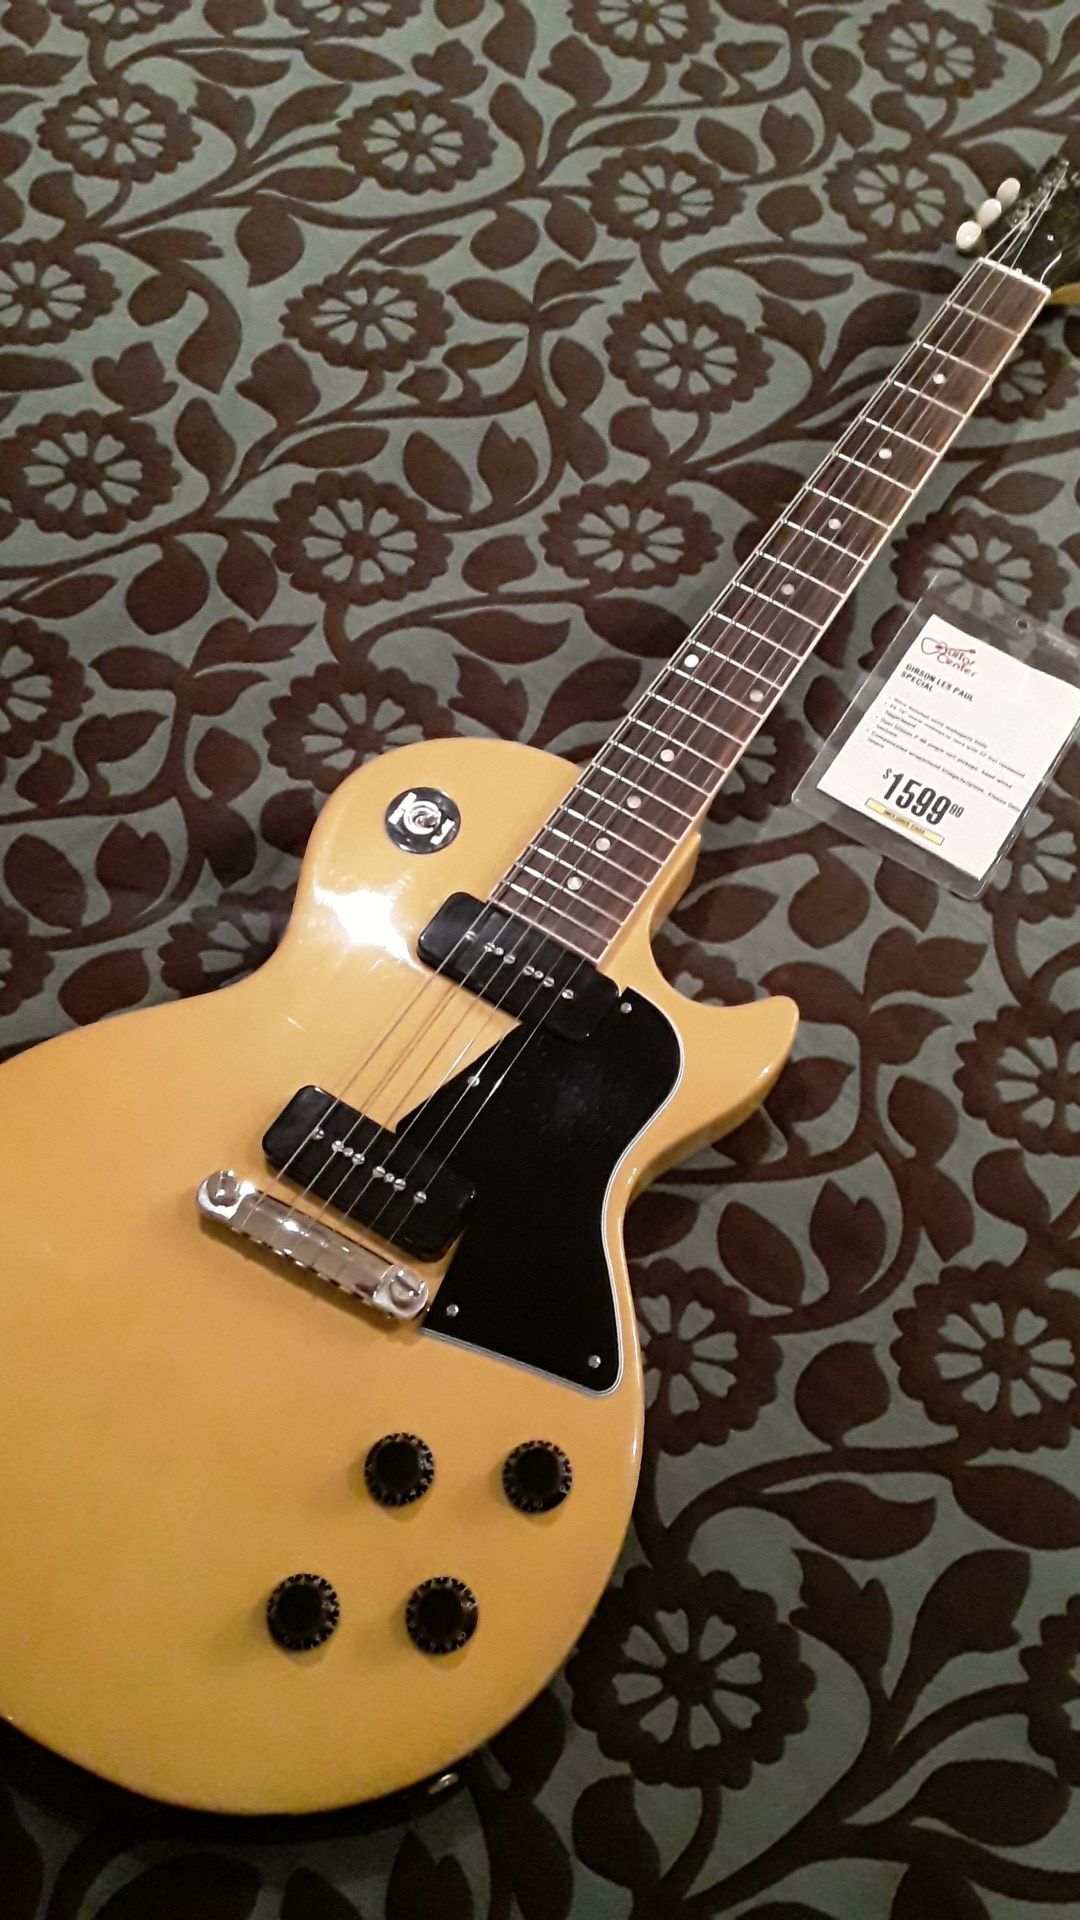 Brand new Gibson Les Paul